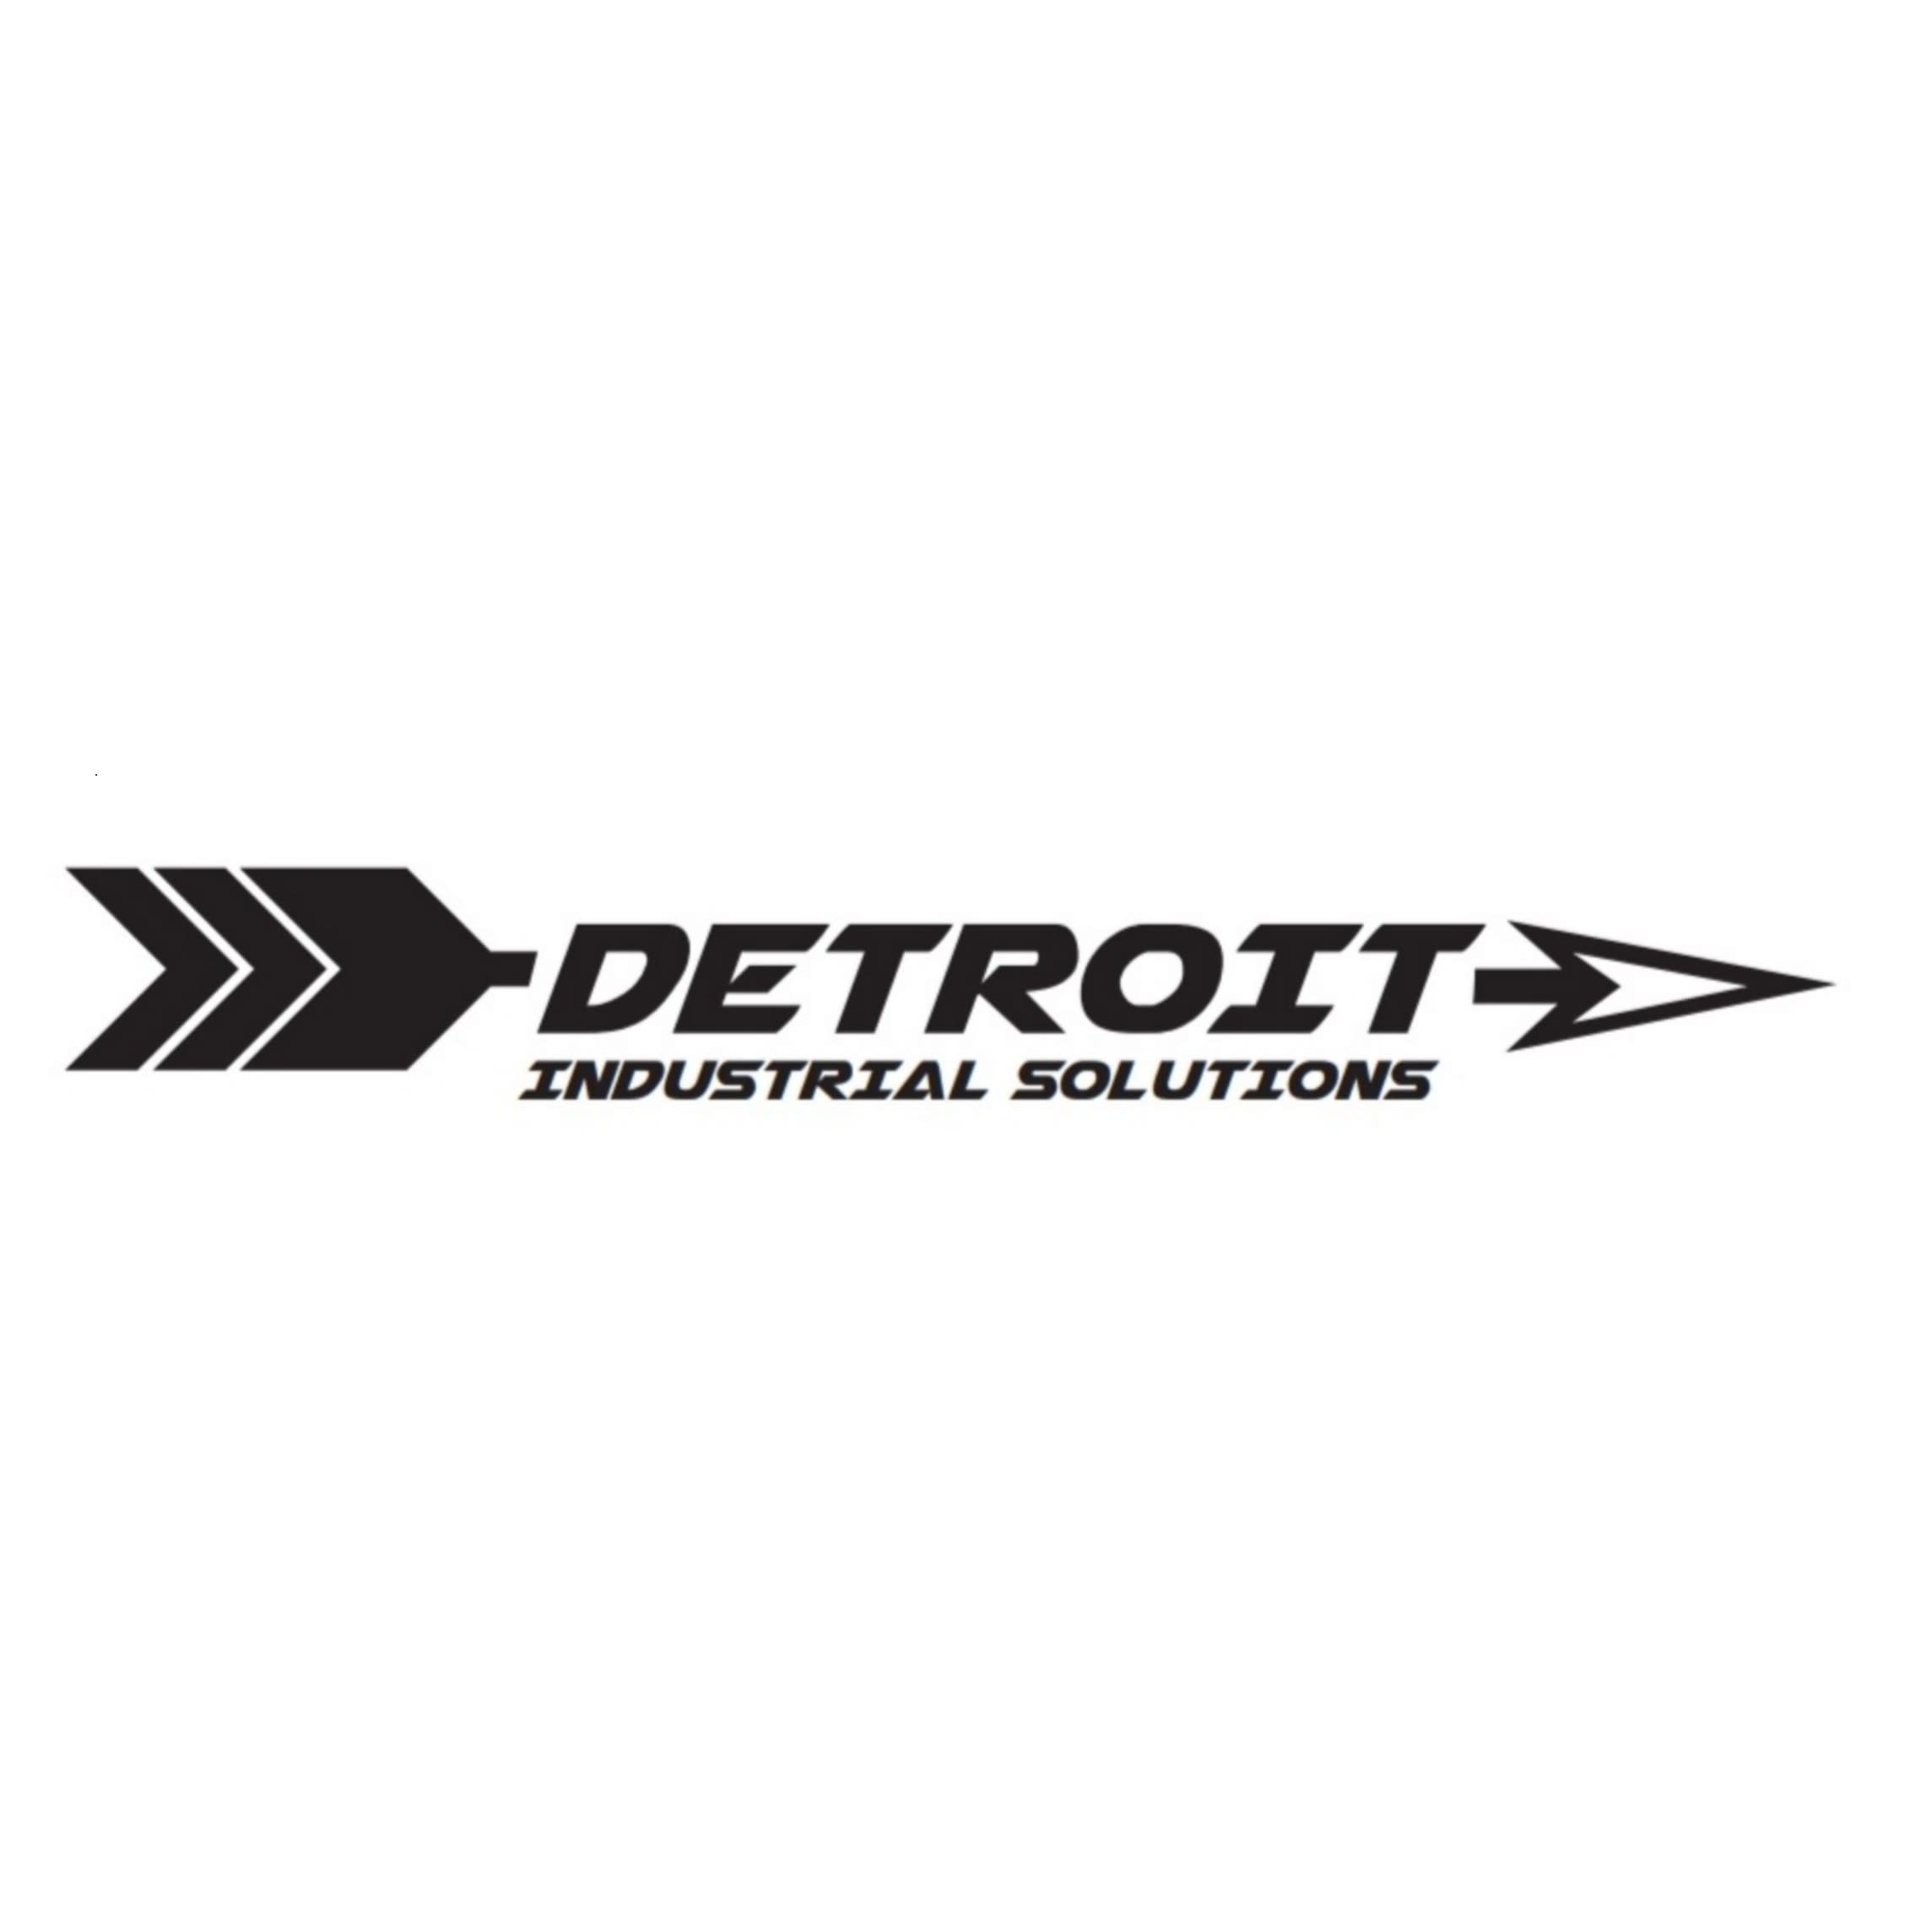 Detroit Industrial Solutions